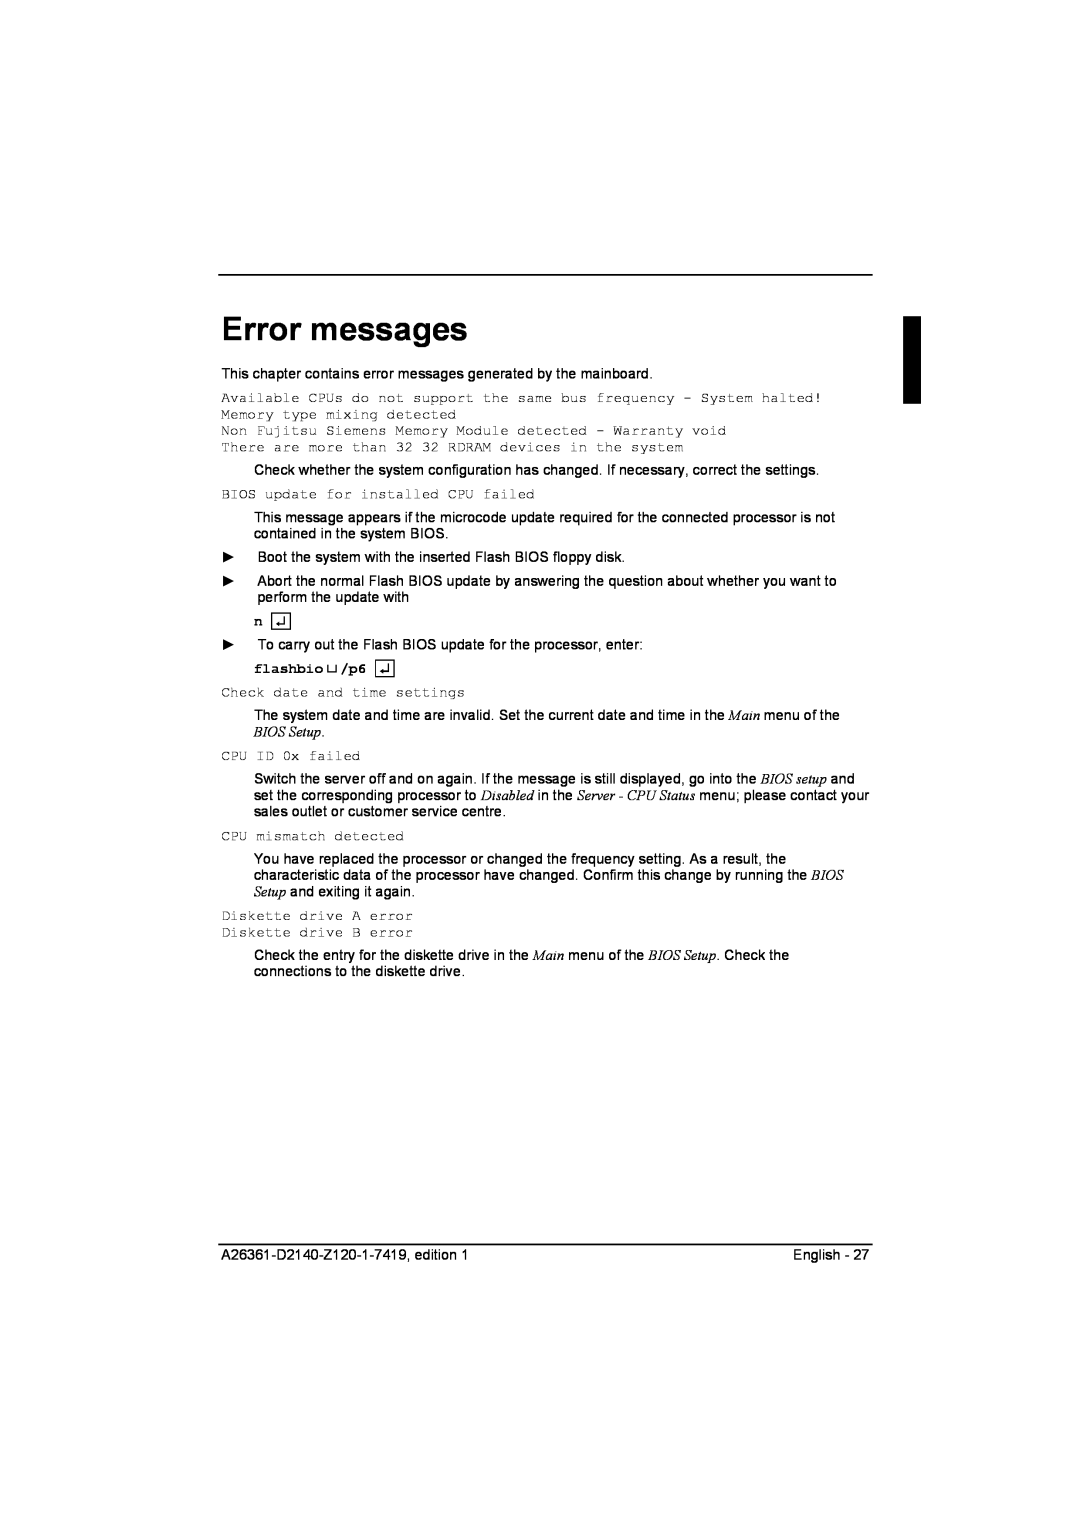 Eclipse - Fujitsu Ten D2140 technical manual Error messages, flashbio/p6 